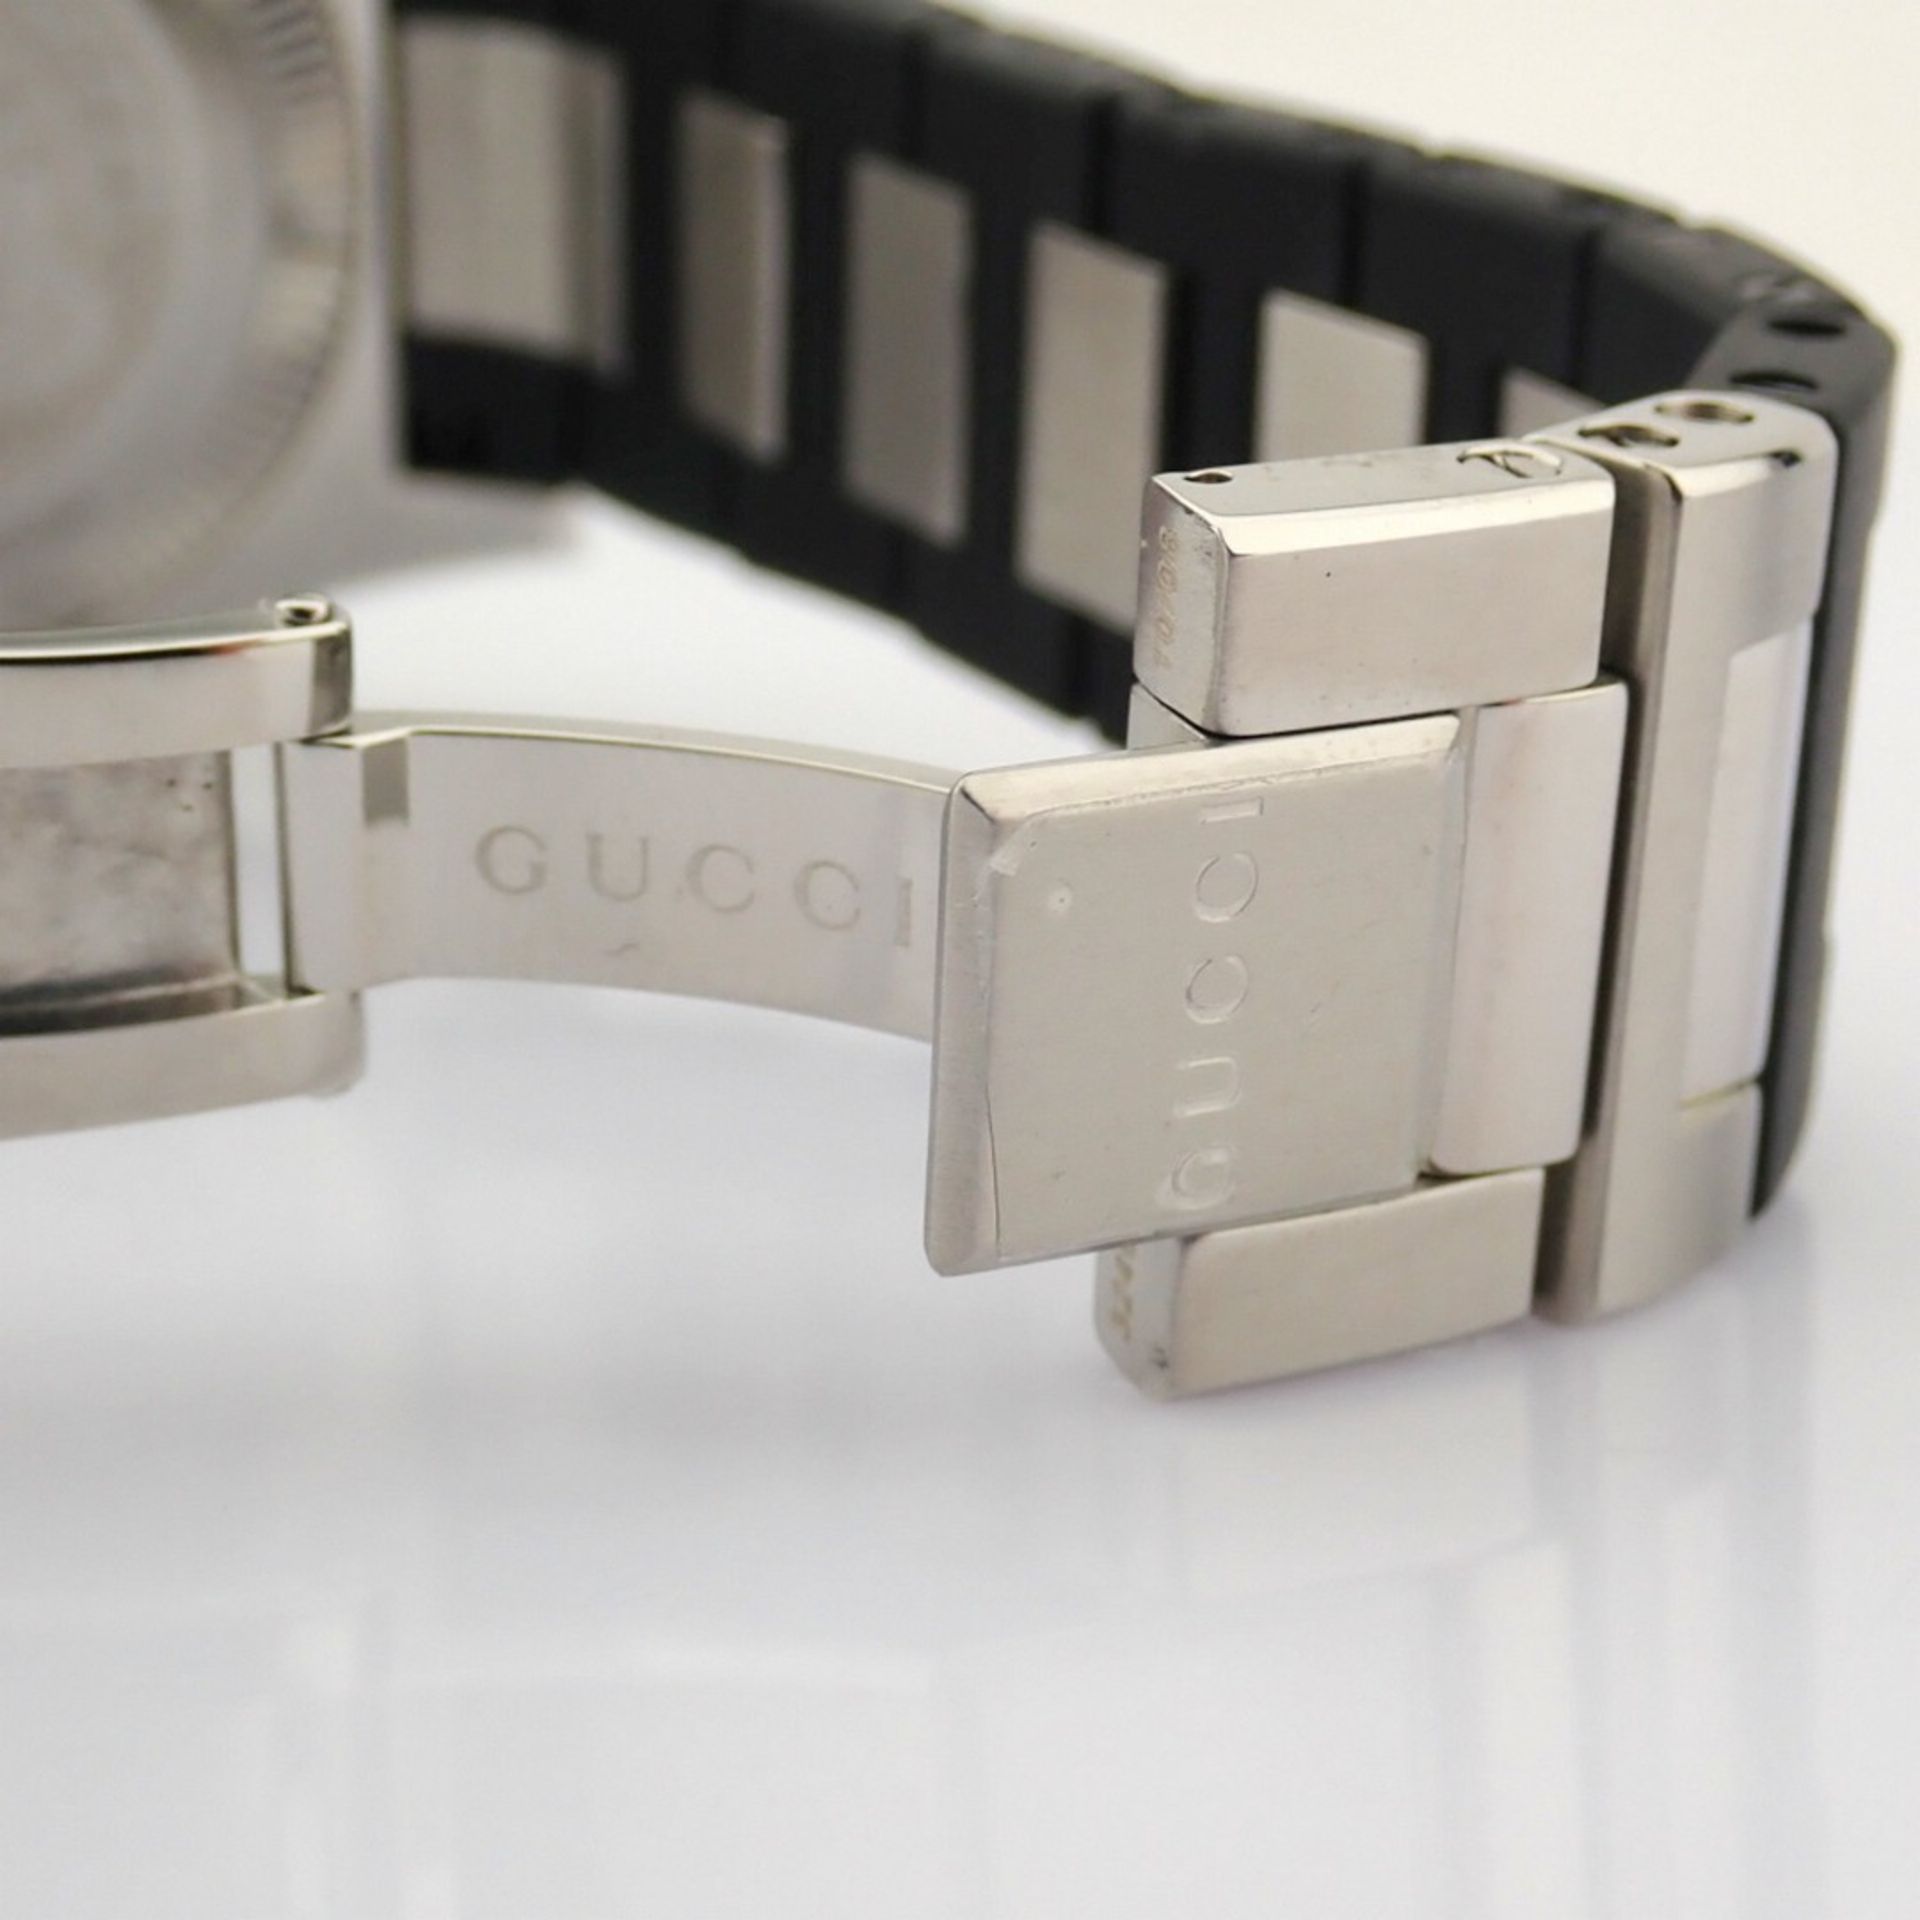 Gucci / Pantheon 115.2 (Brand New) - Gentlmen's Steel Wrist Watch - Image 2 of 13